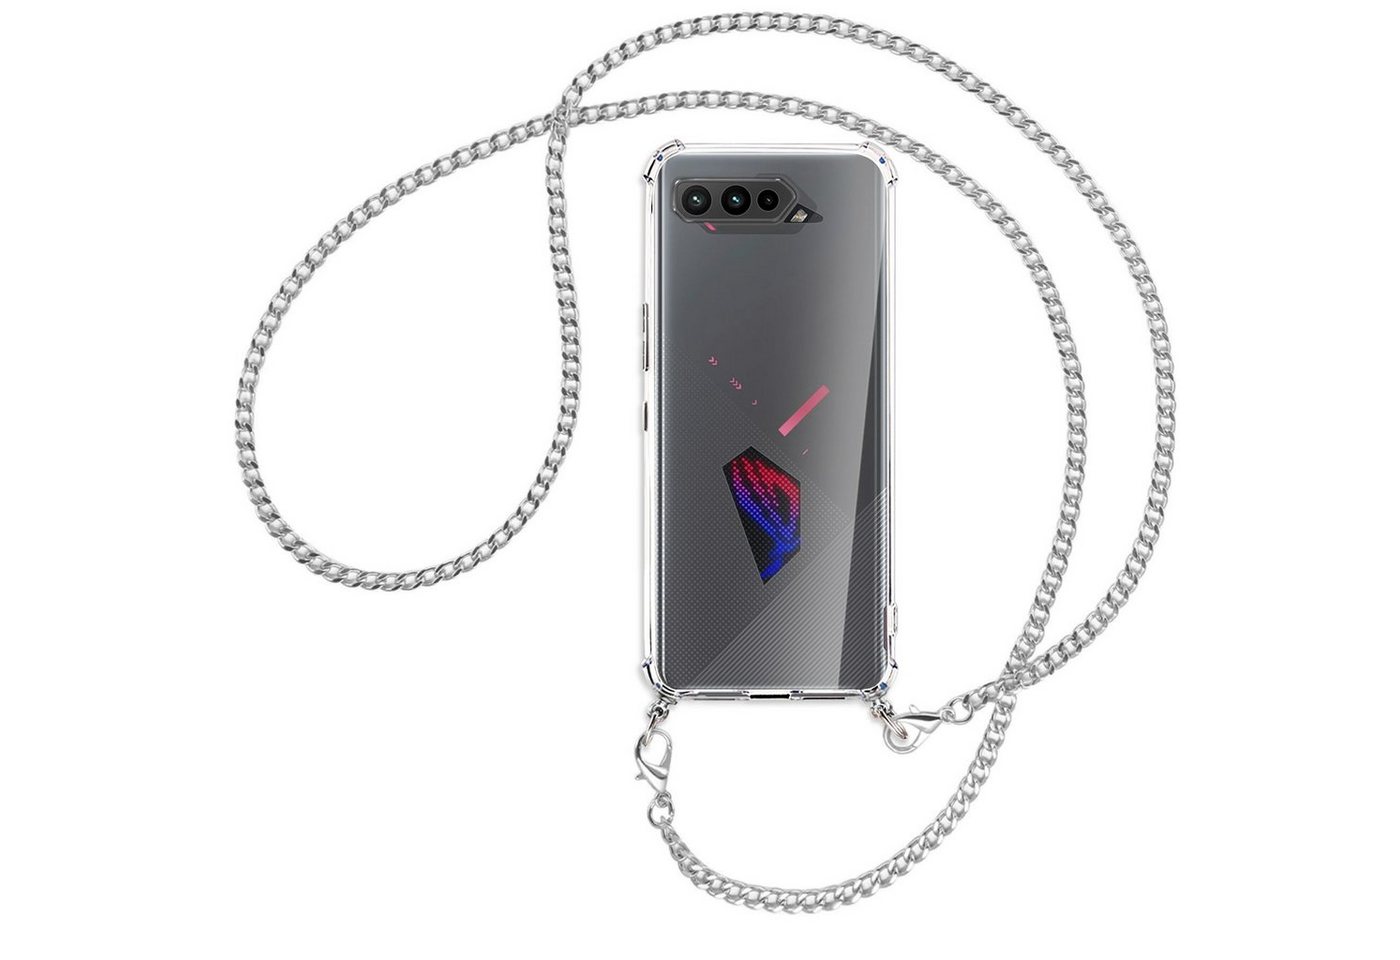 mtb more energy Handykette für Asus ROG Phone 5, 5 Ultimate, 5 Pro ZS673KS [MK], Umhängehülle mit Metallkette [NC-421-MK] von mtb more energy